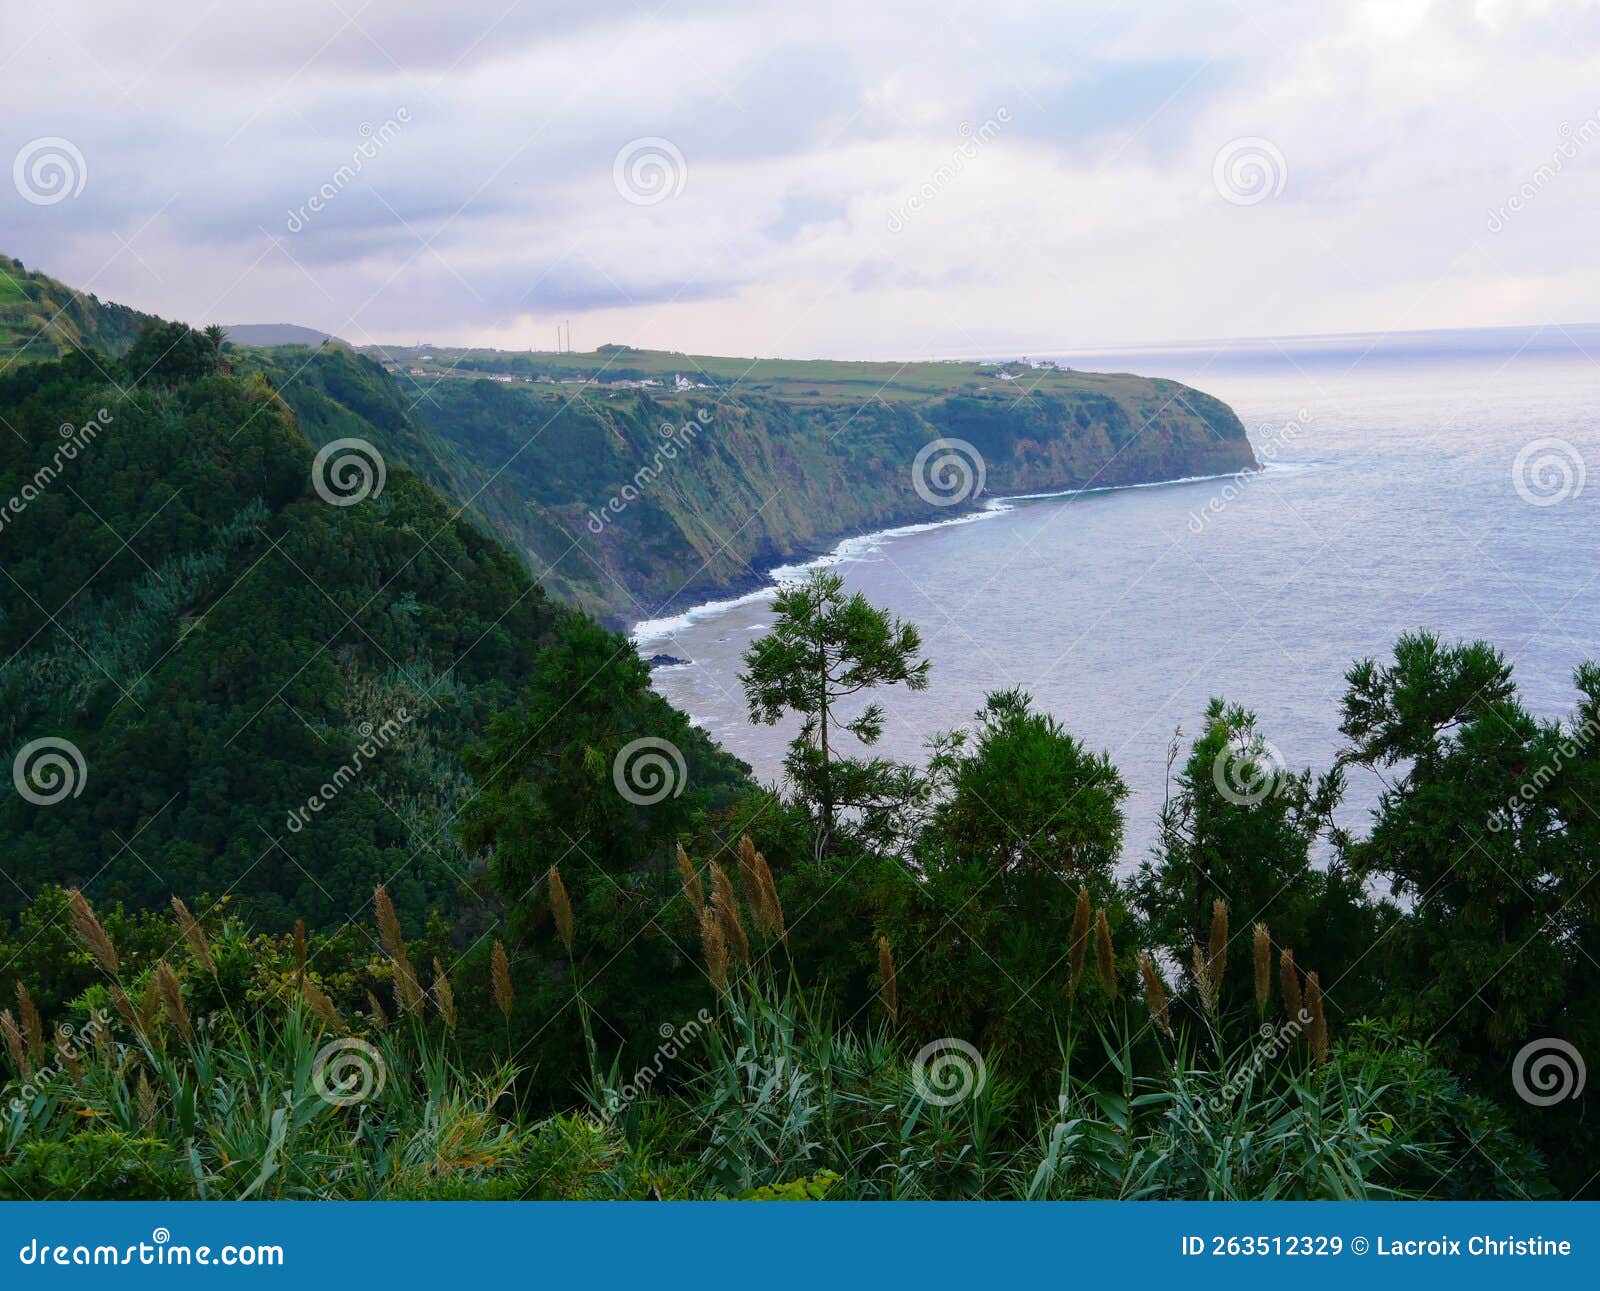 cliff of algarvia seen from the miradouro despe-te-que-suas on the island of sao miguel